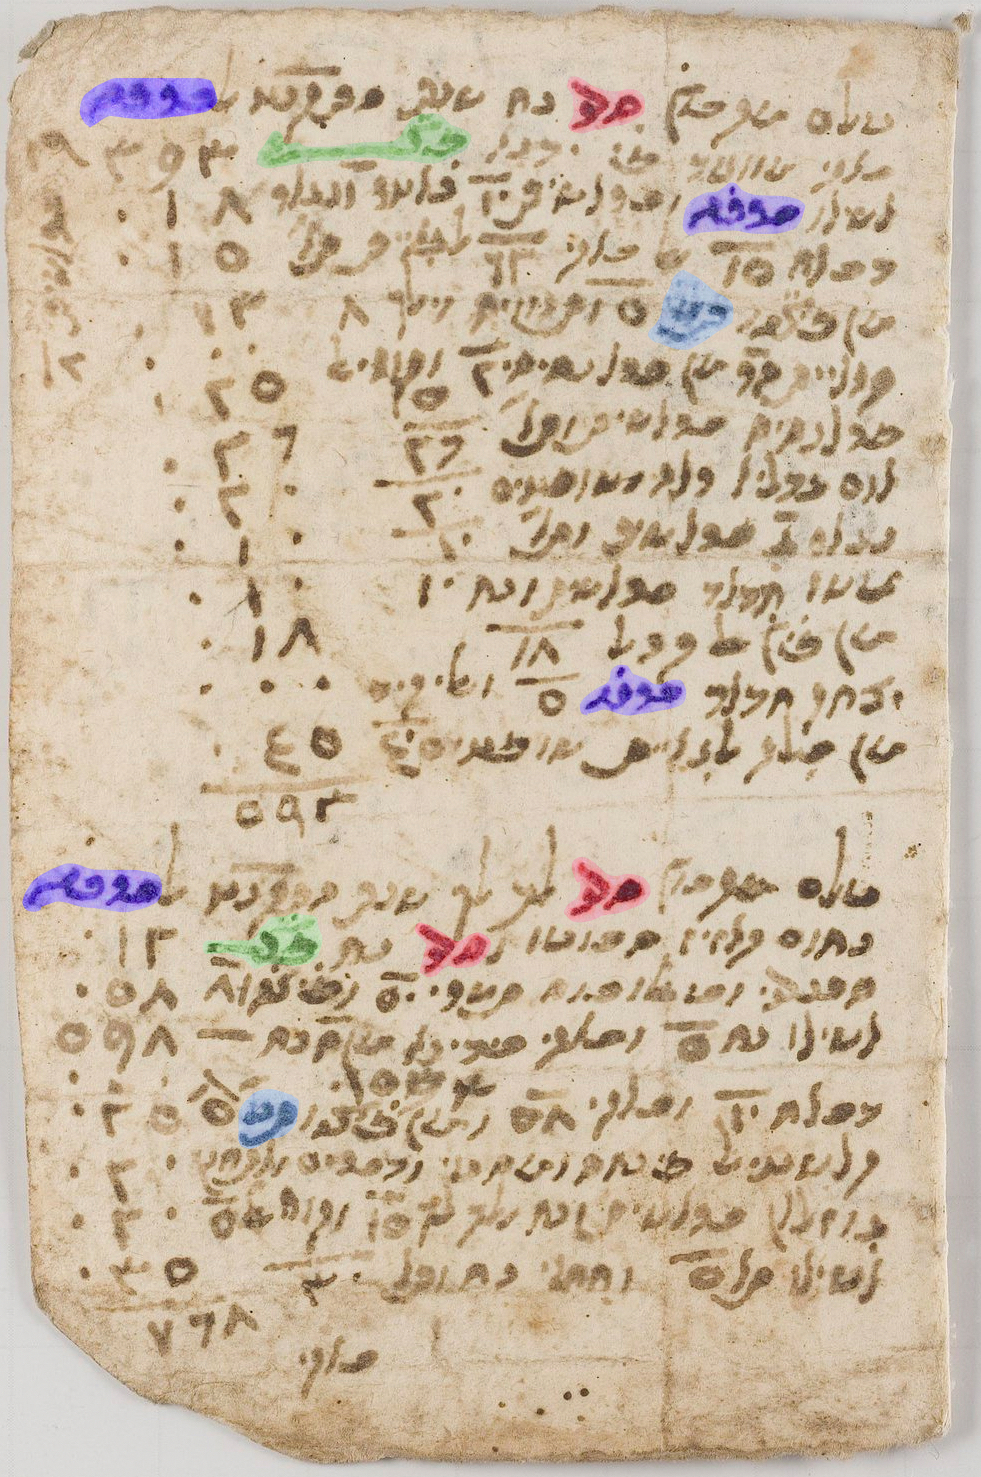 Manuscript image showing Hebrew letterforms in cursive script